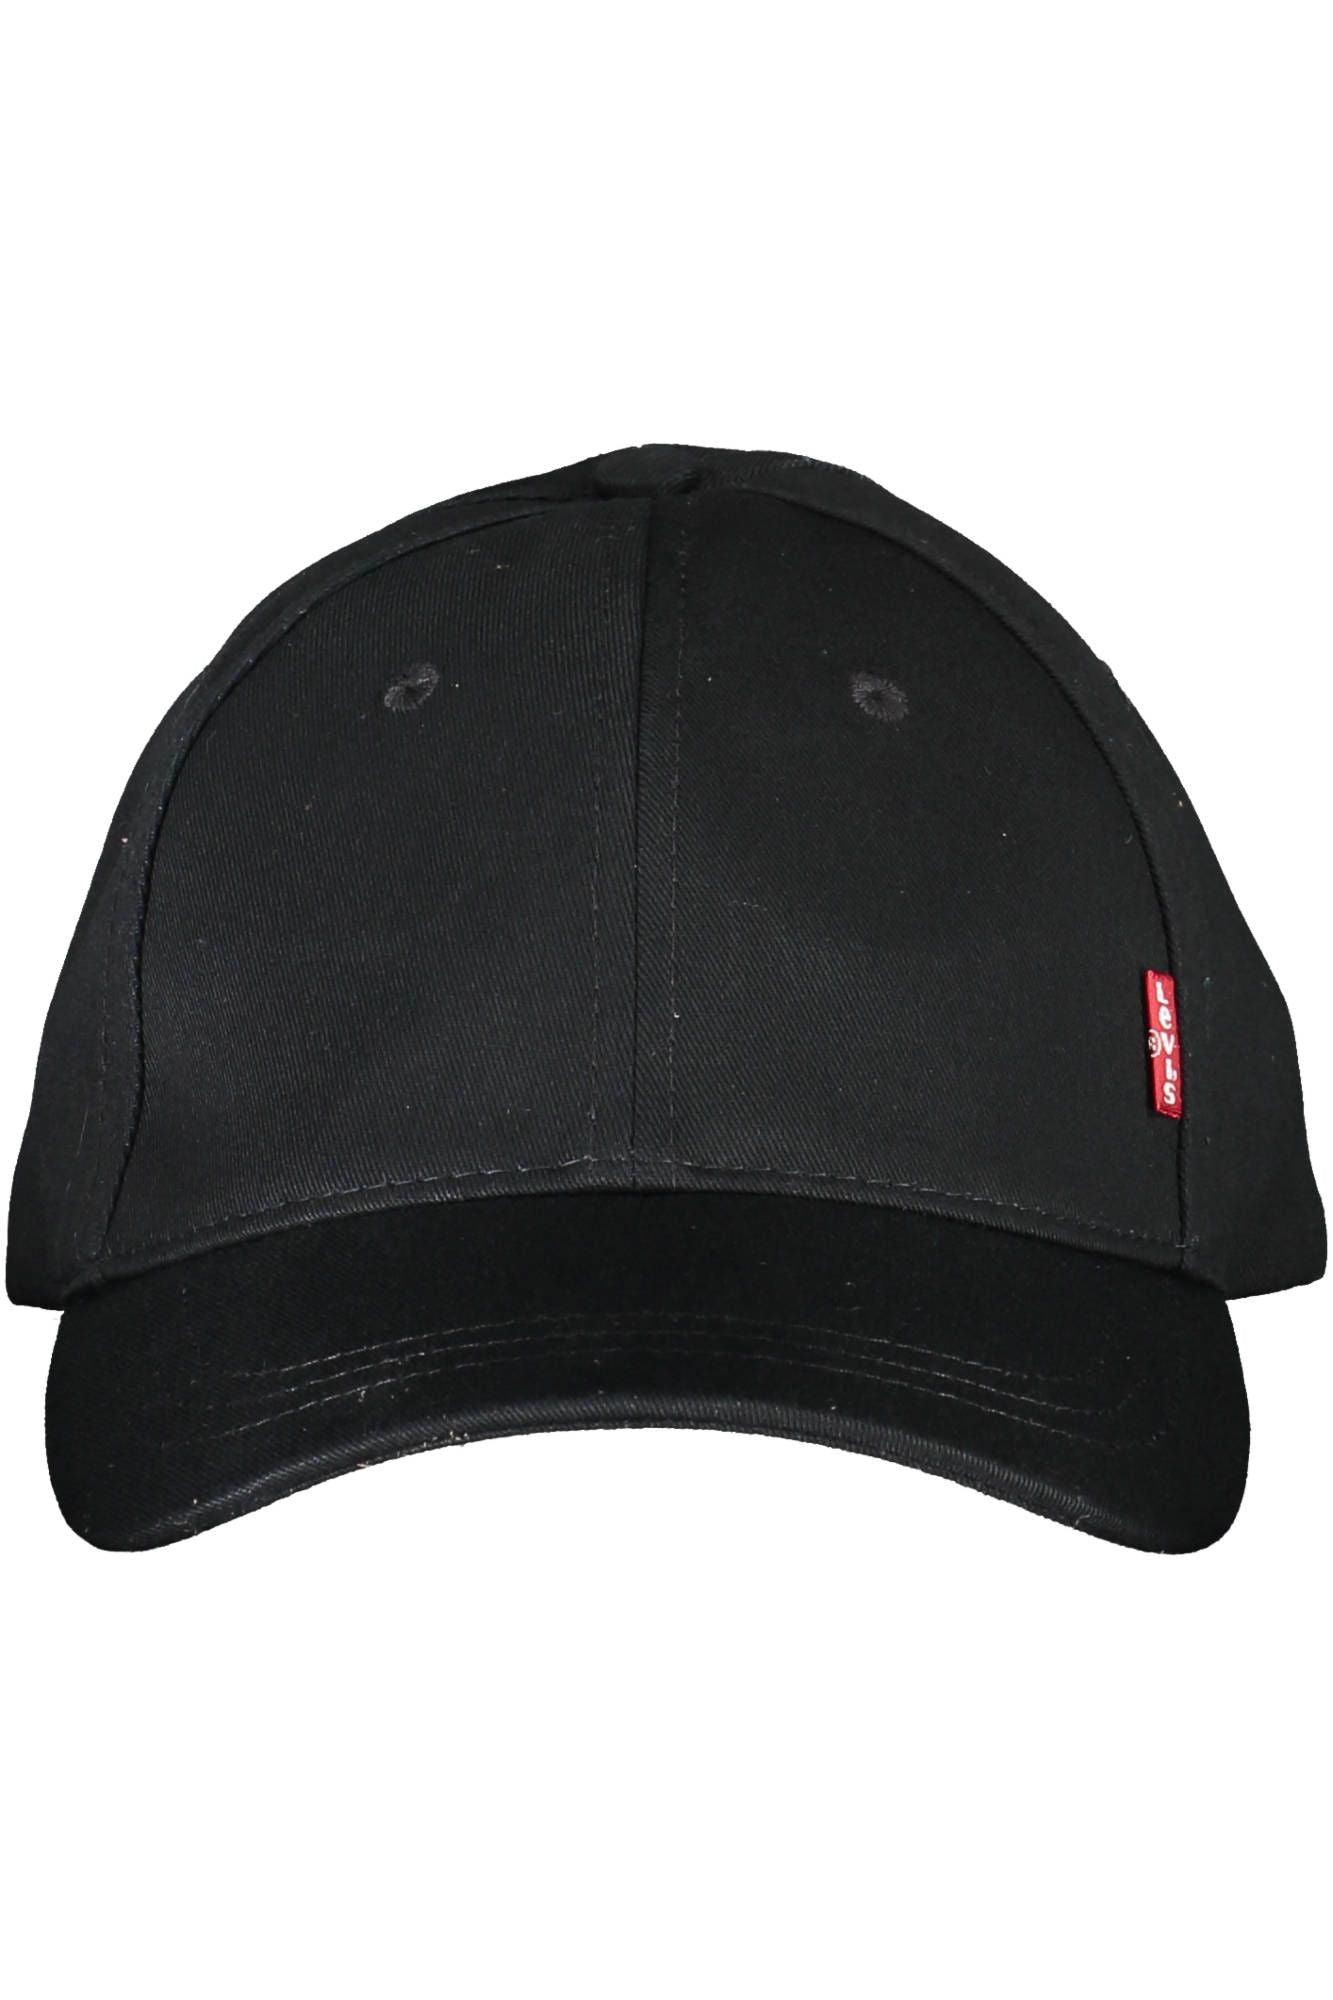 Levi's Sleek Black Cotton Cap with Logo Visor - PER.FASHION